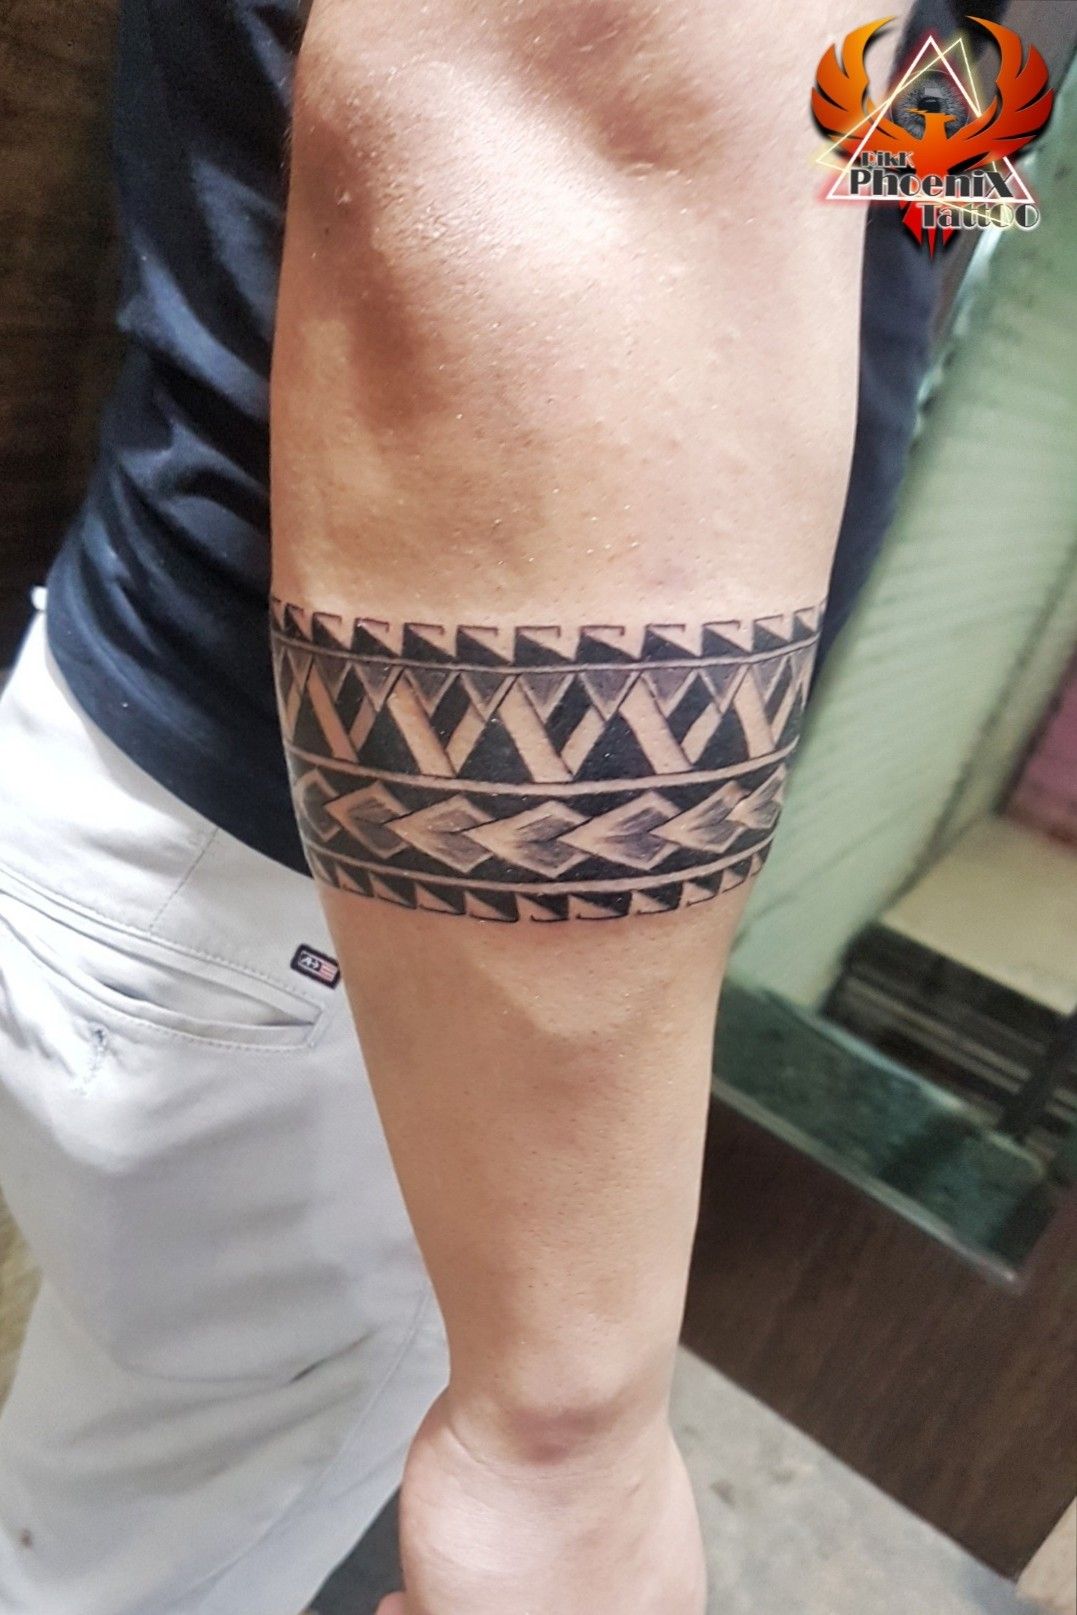 Tattoo uploaded by Rikk Phoenix Tattoo • #maoriband #maori  #polynesiantattoo #forearmtattoo #band #tattoo #polynesianband #bandtattoo # armband #armbandtattoo #lining #triangle #shading #tattooforgirls  #tattoolife #tattooformen #tattooforboys #design ...